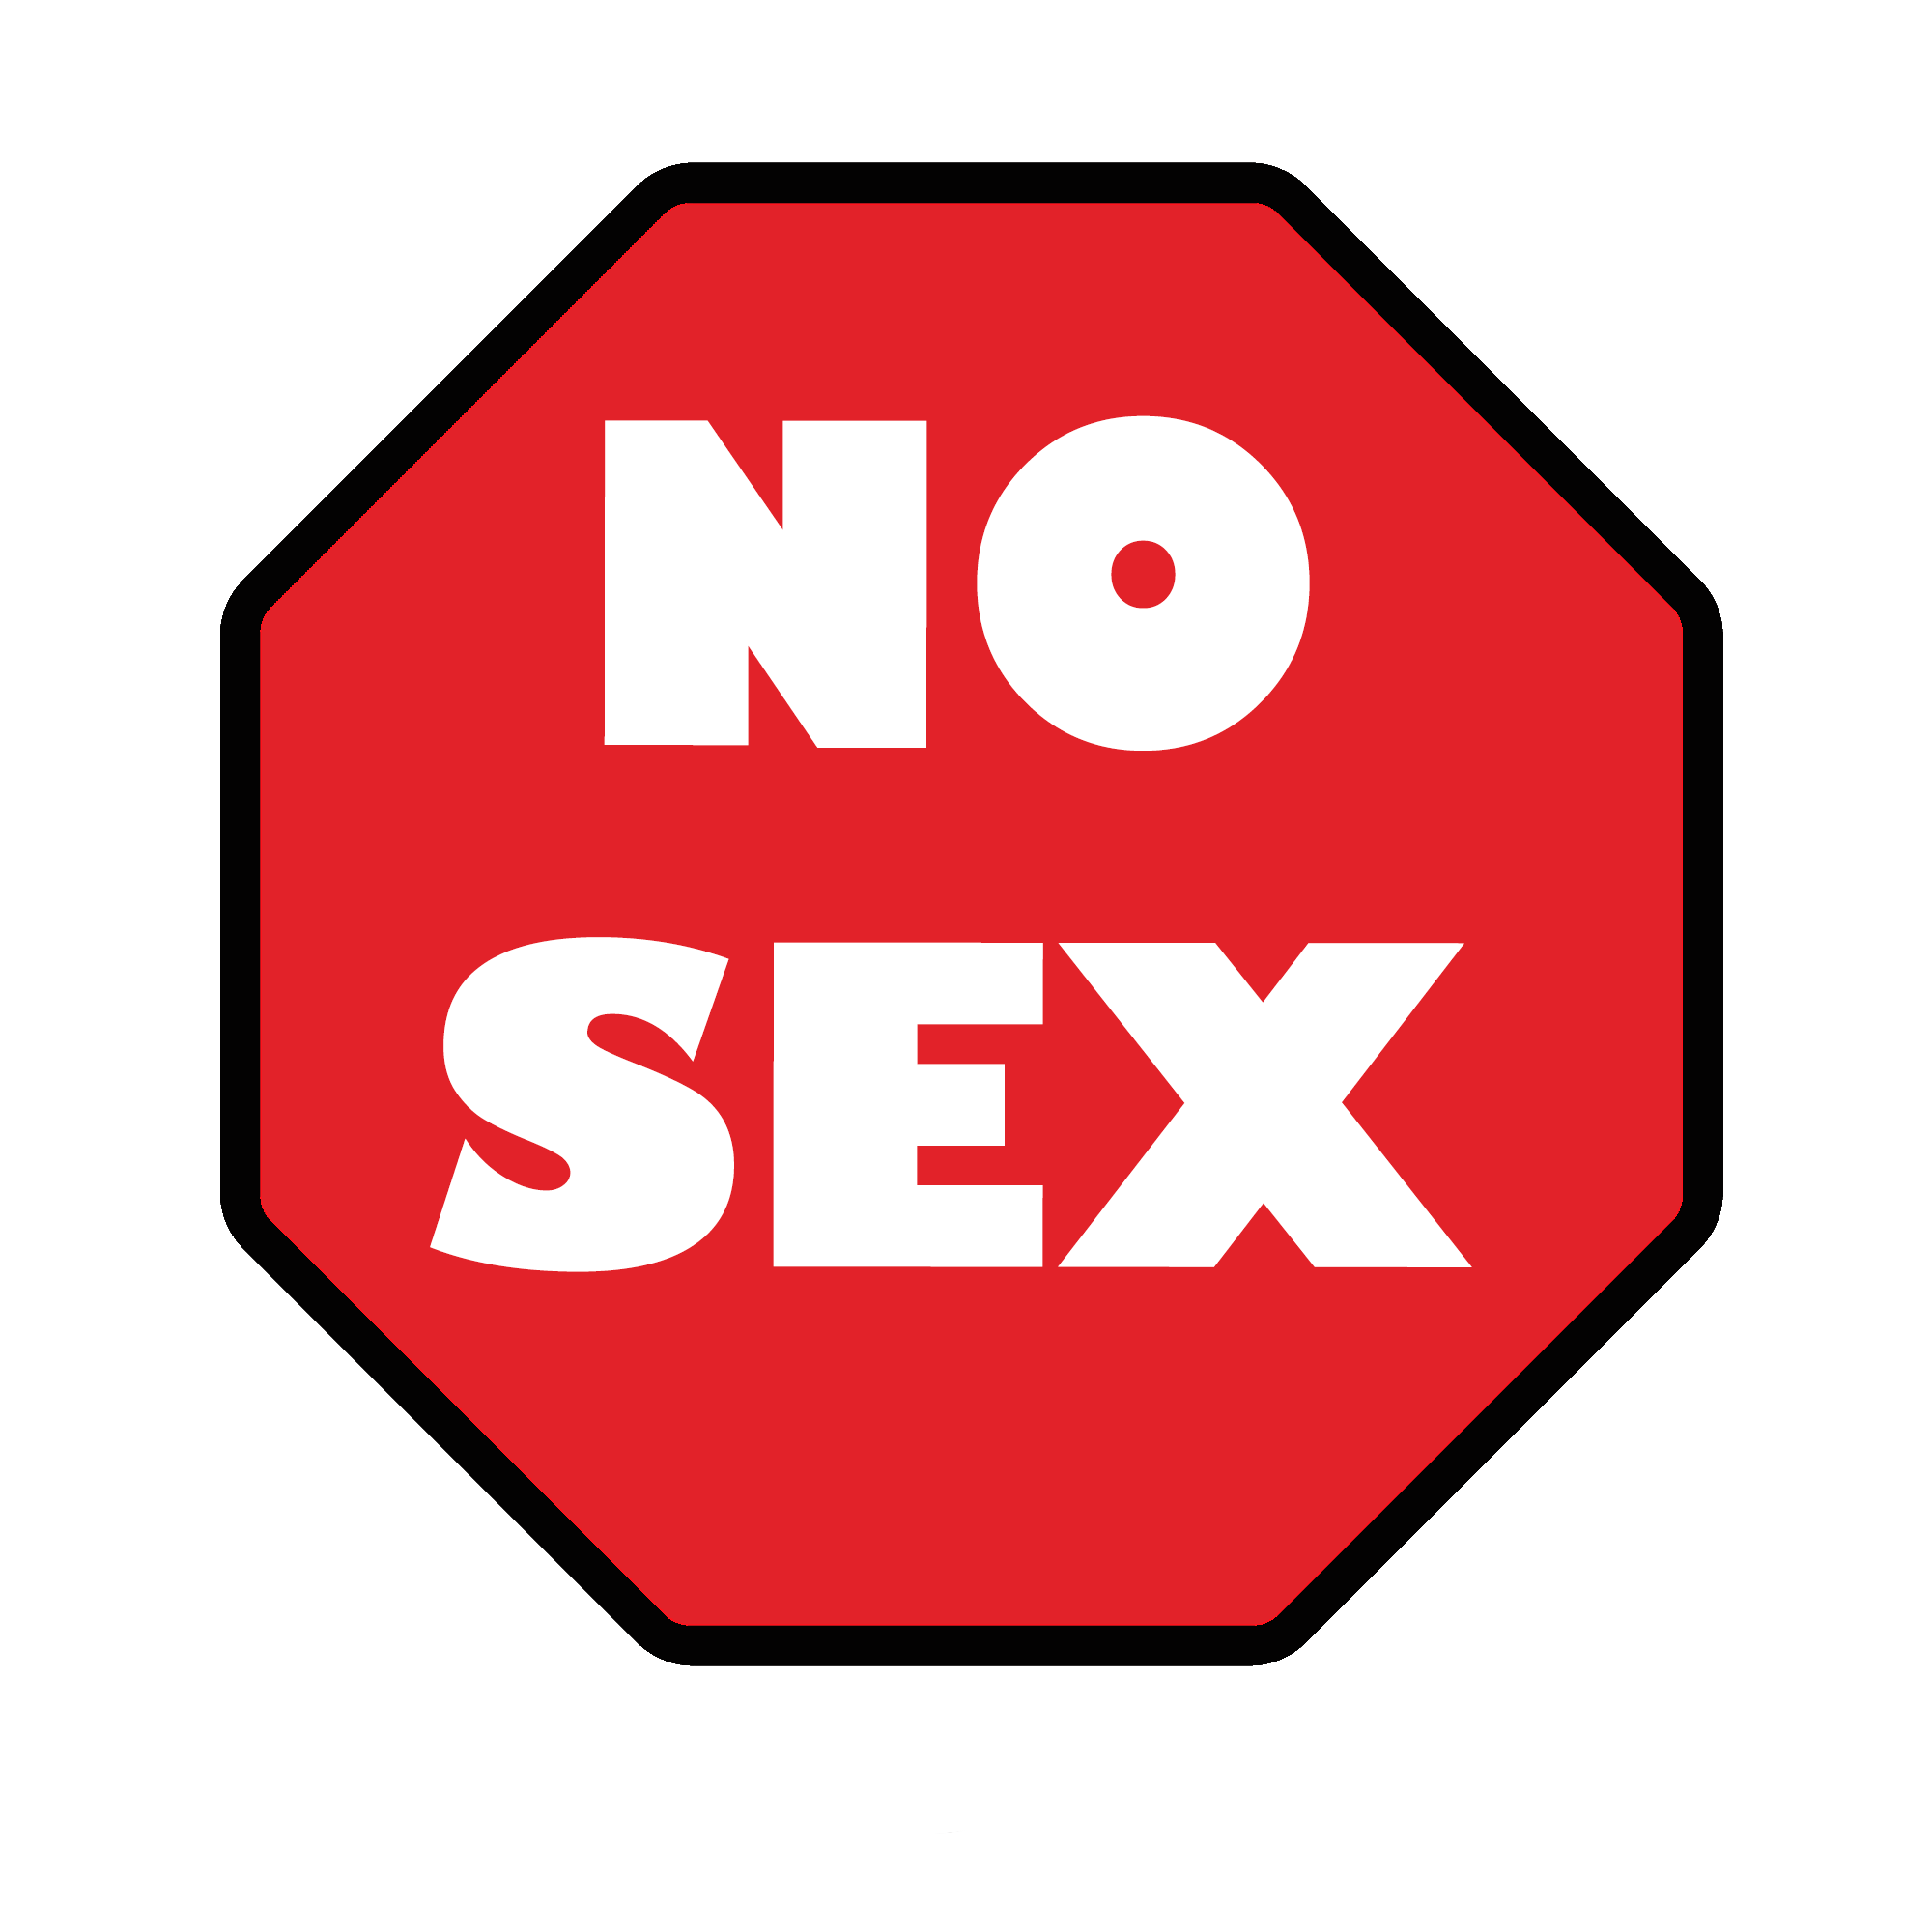 Stop Sex No Sex On